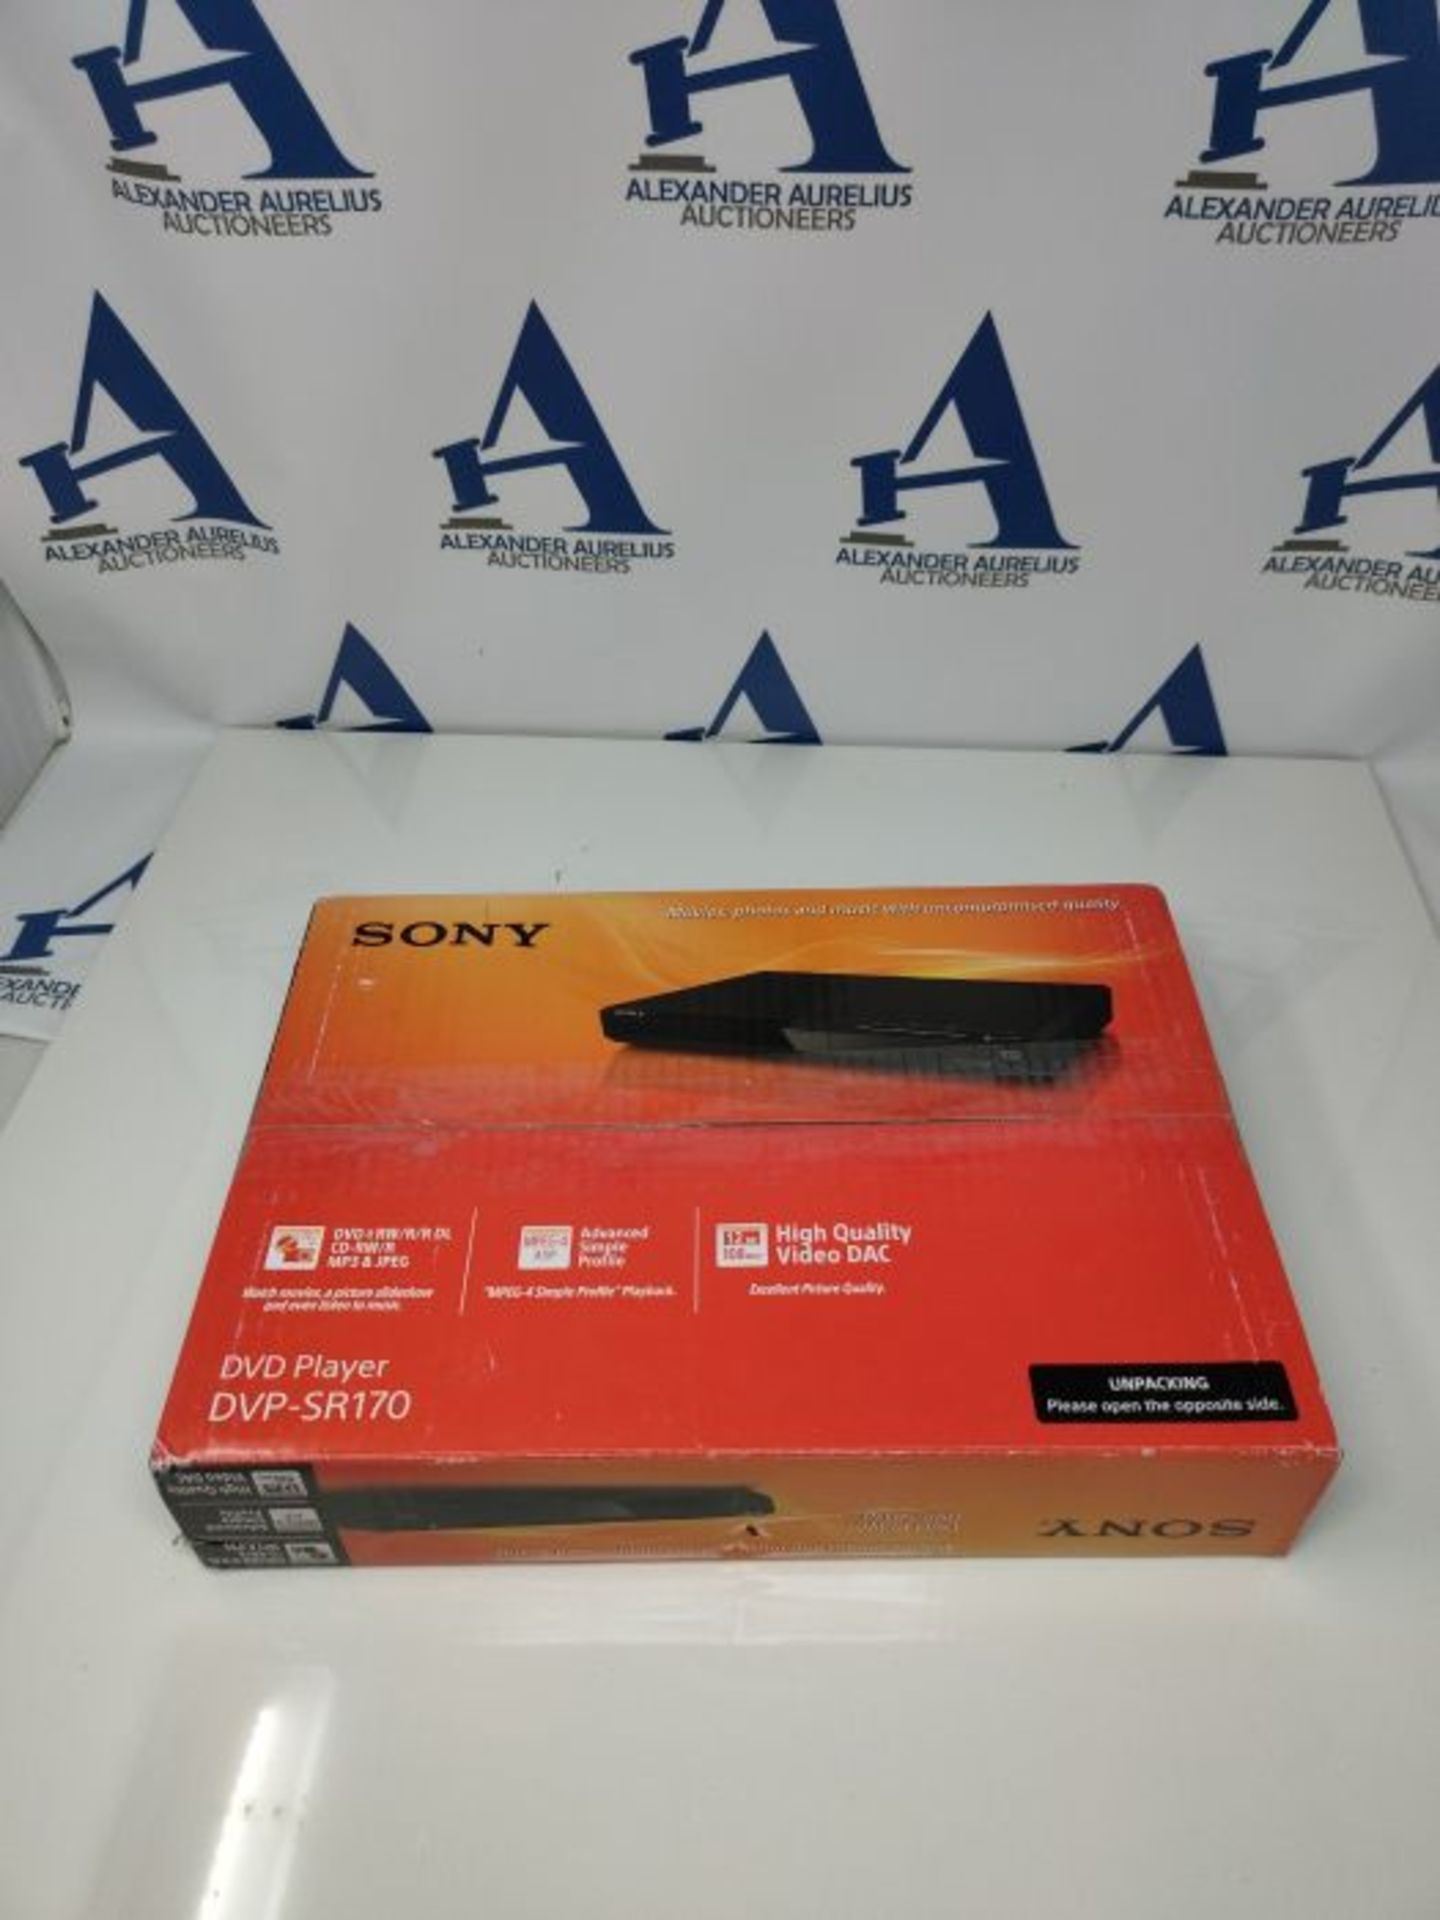 Sony DVP-SR170 DVD Player, Scart Only (No HDMI Port), Black - Image 2 of 3